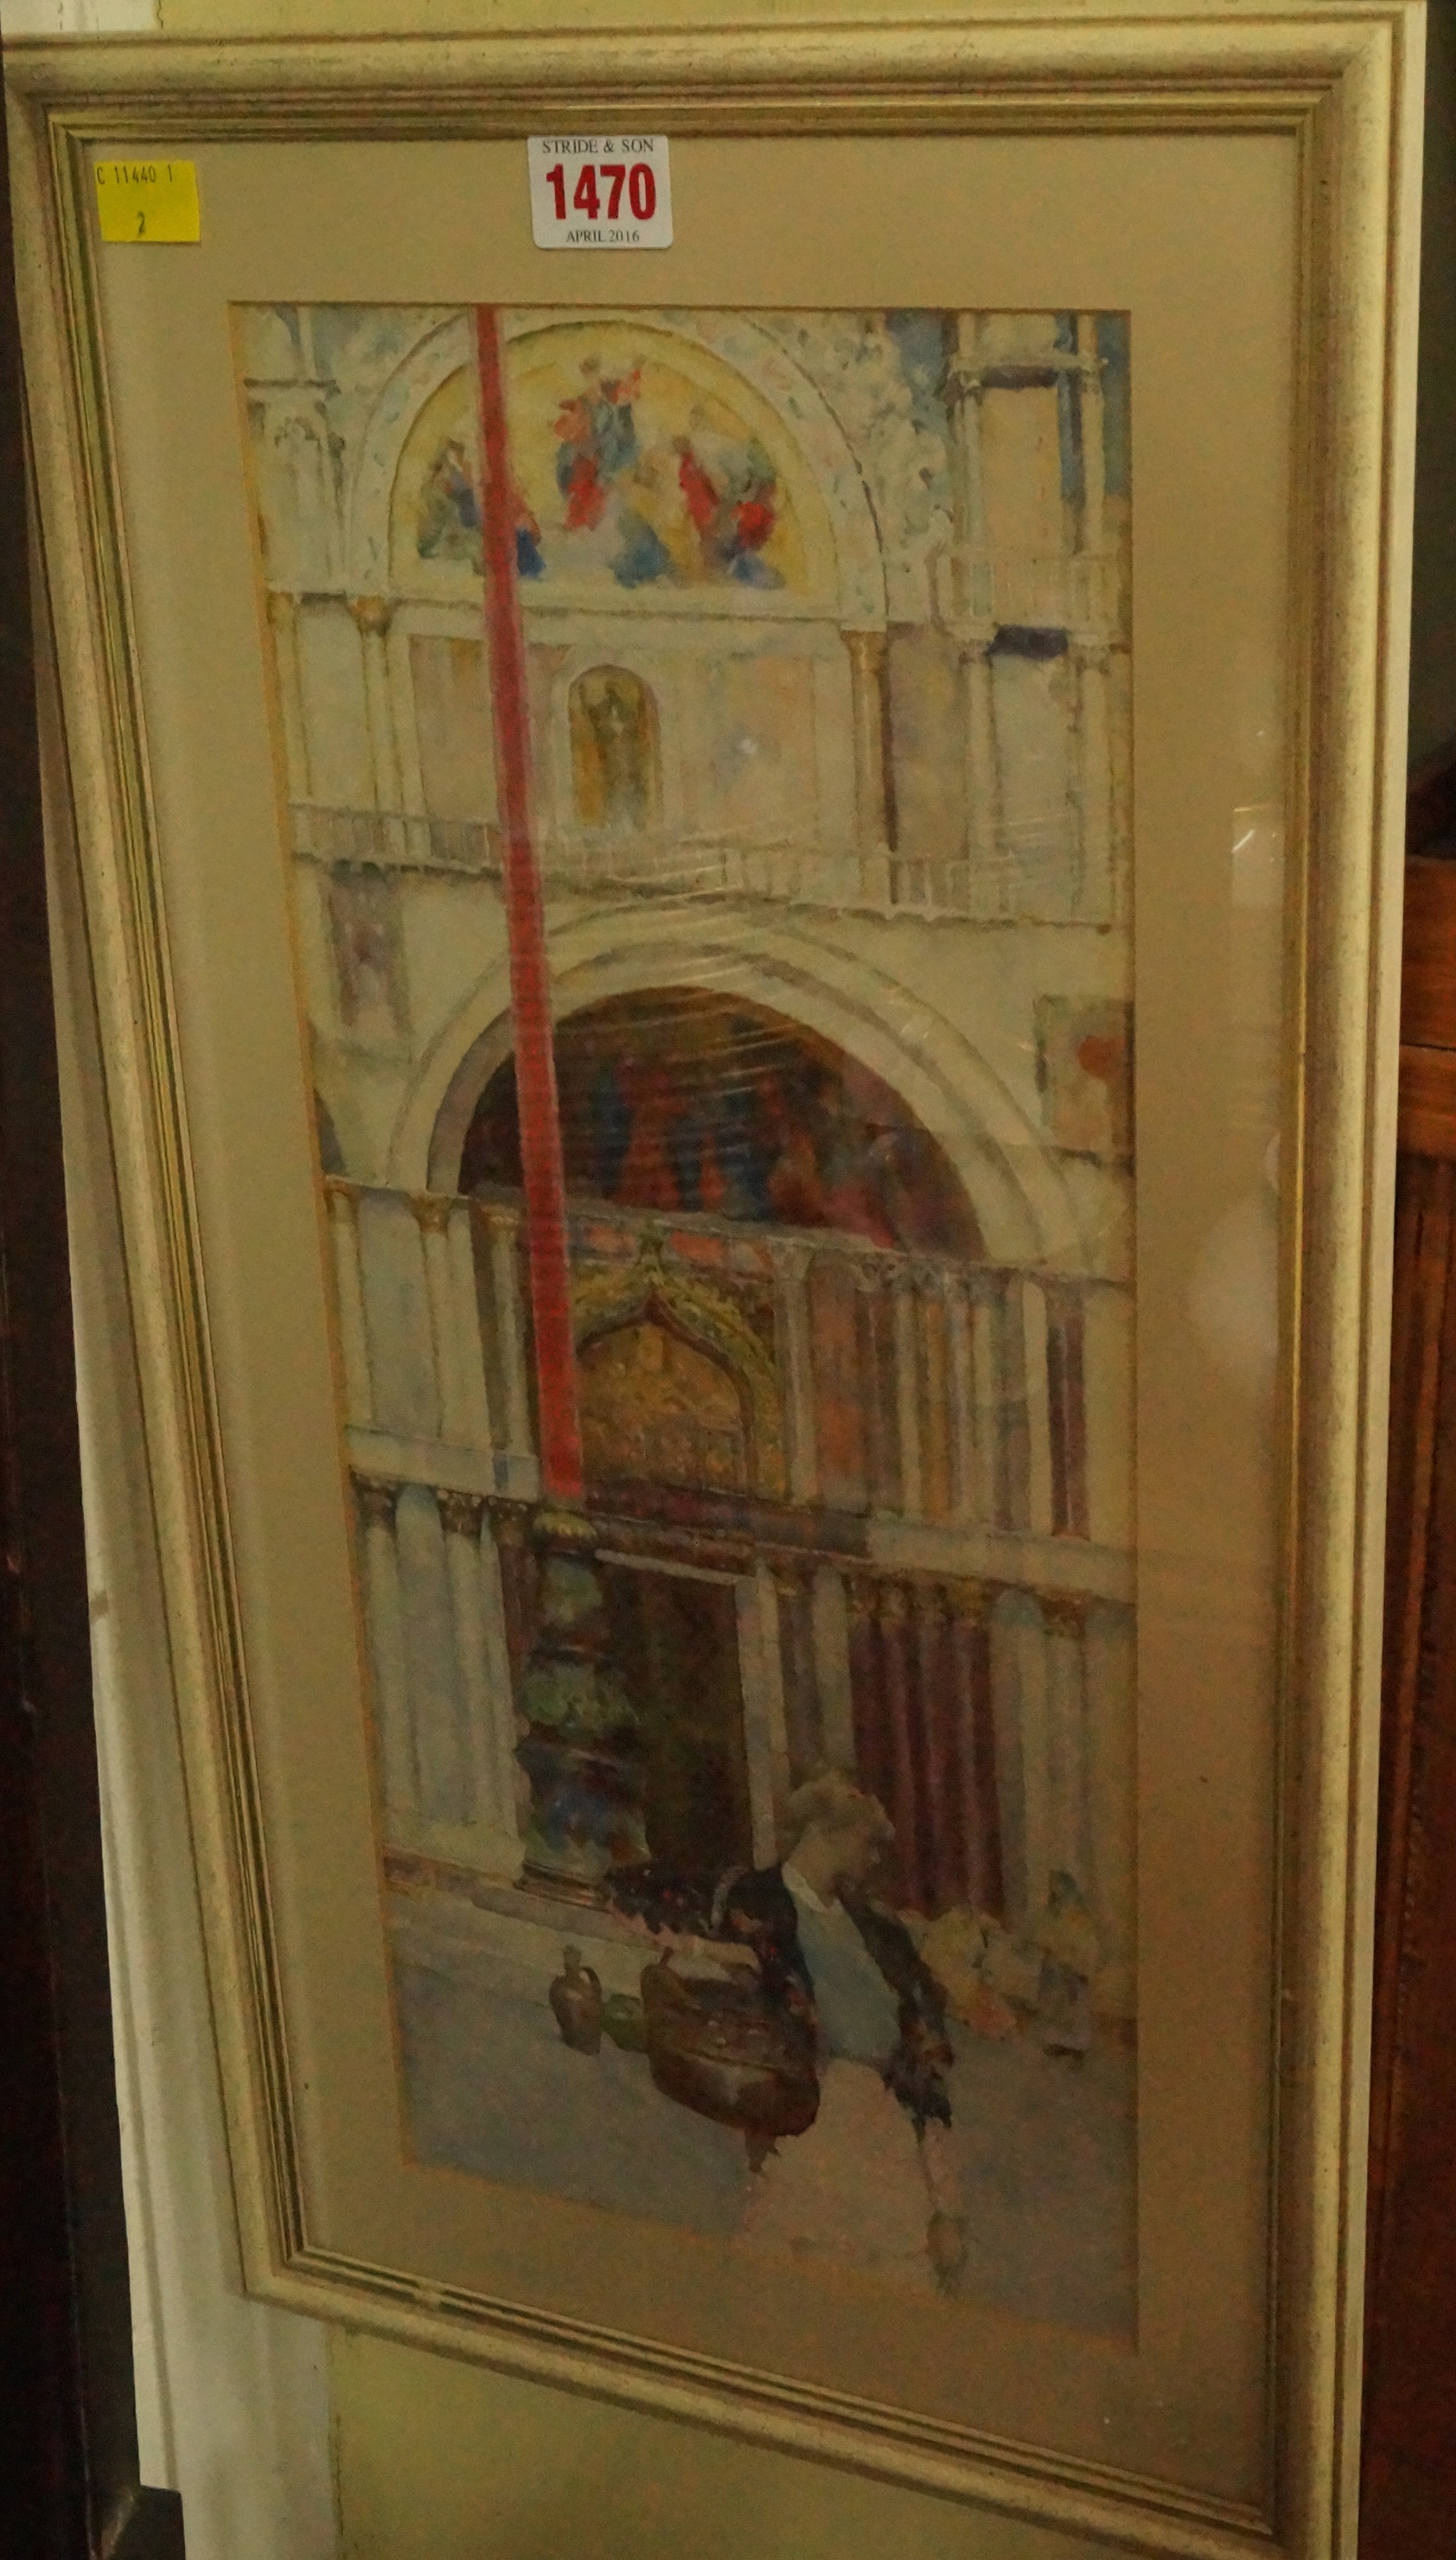 David Woodlock, 'St Mark's Square,Venice', signed, watercolour, 46.5 x 20cm. - Image 4 of 6